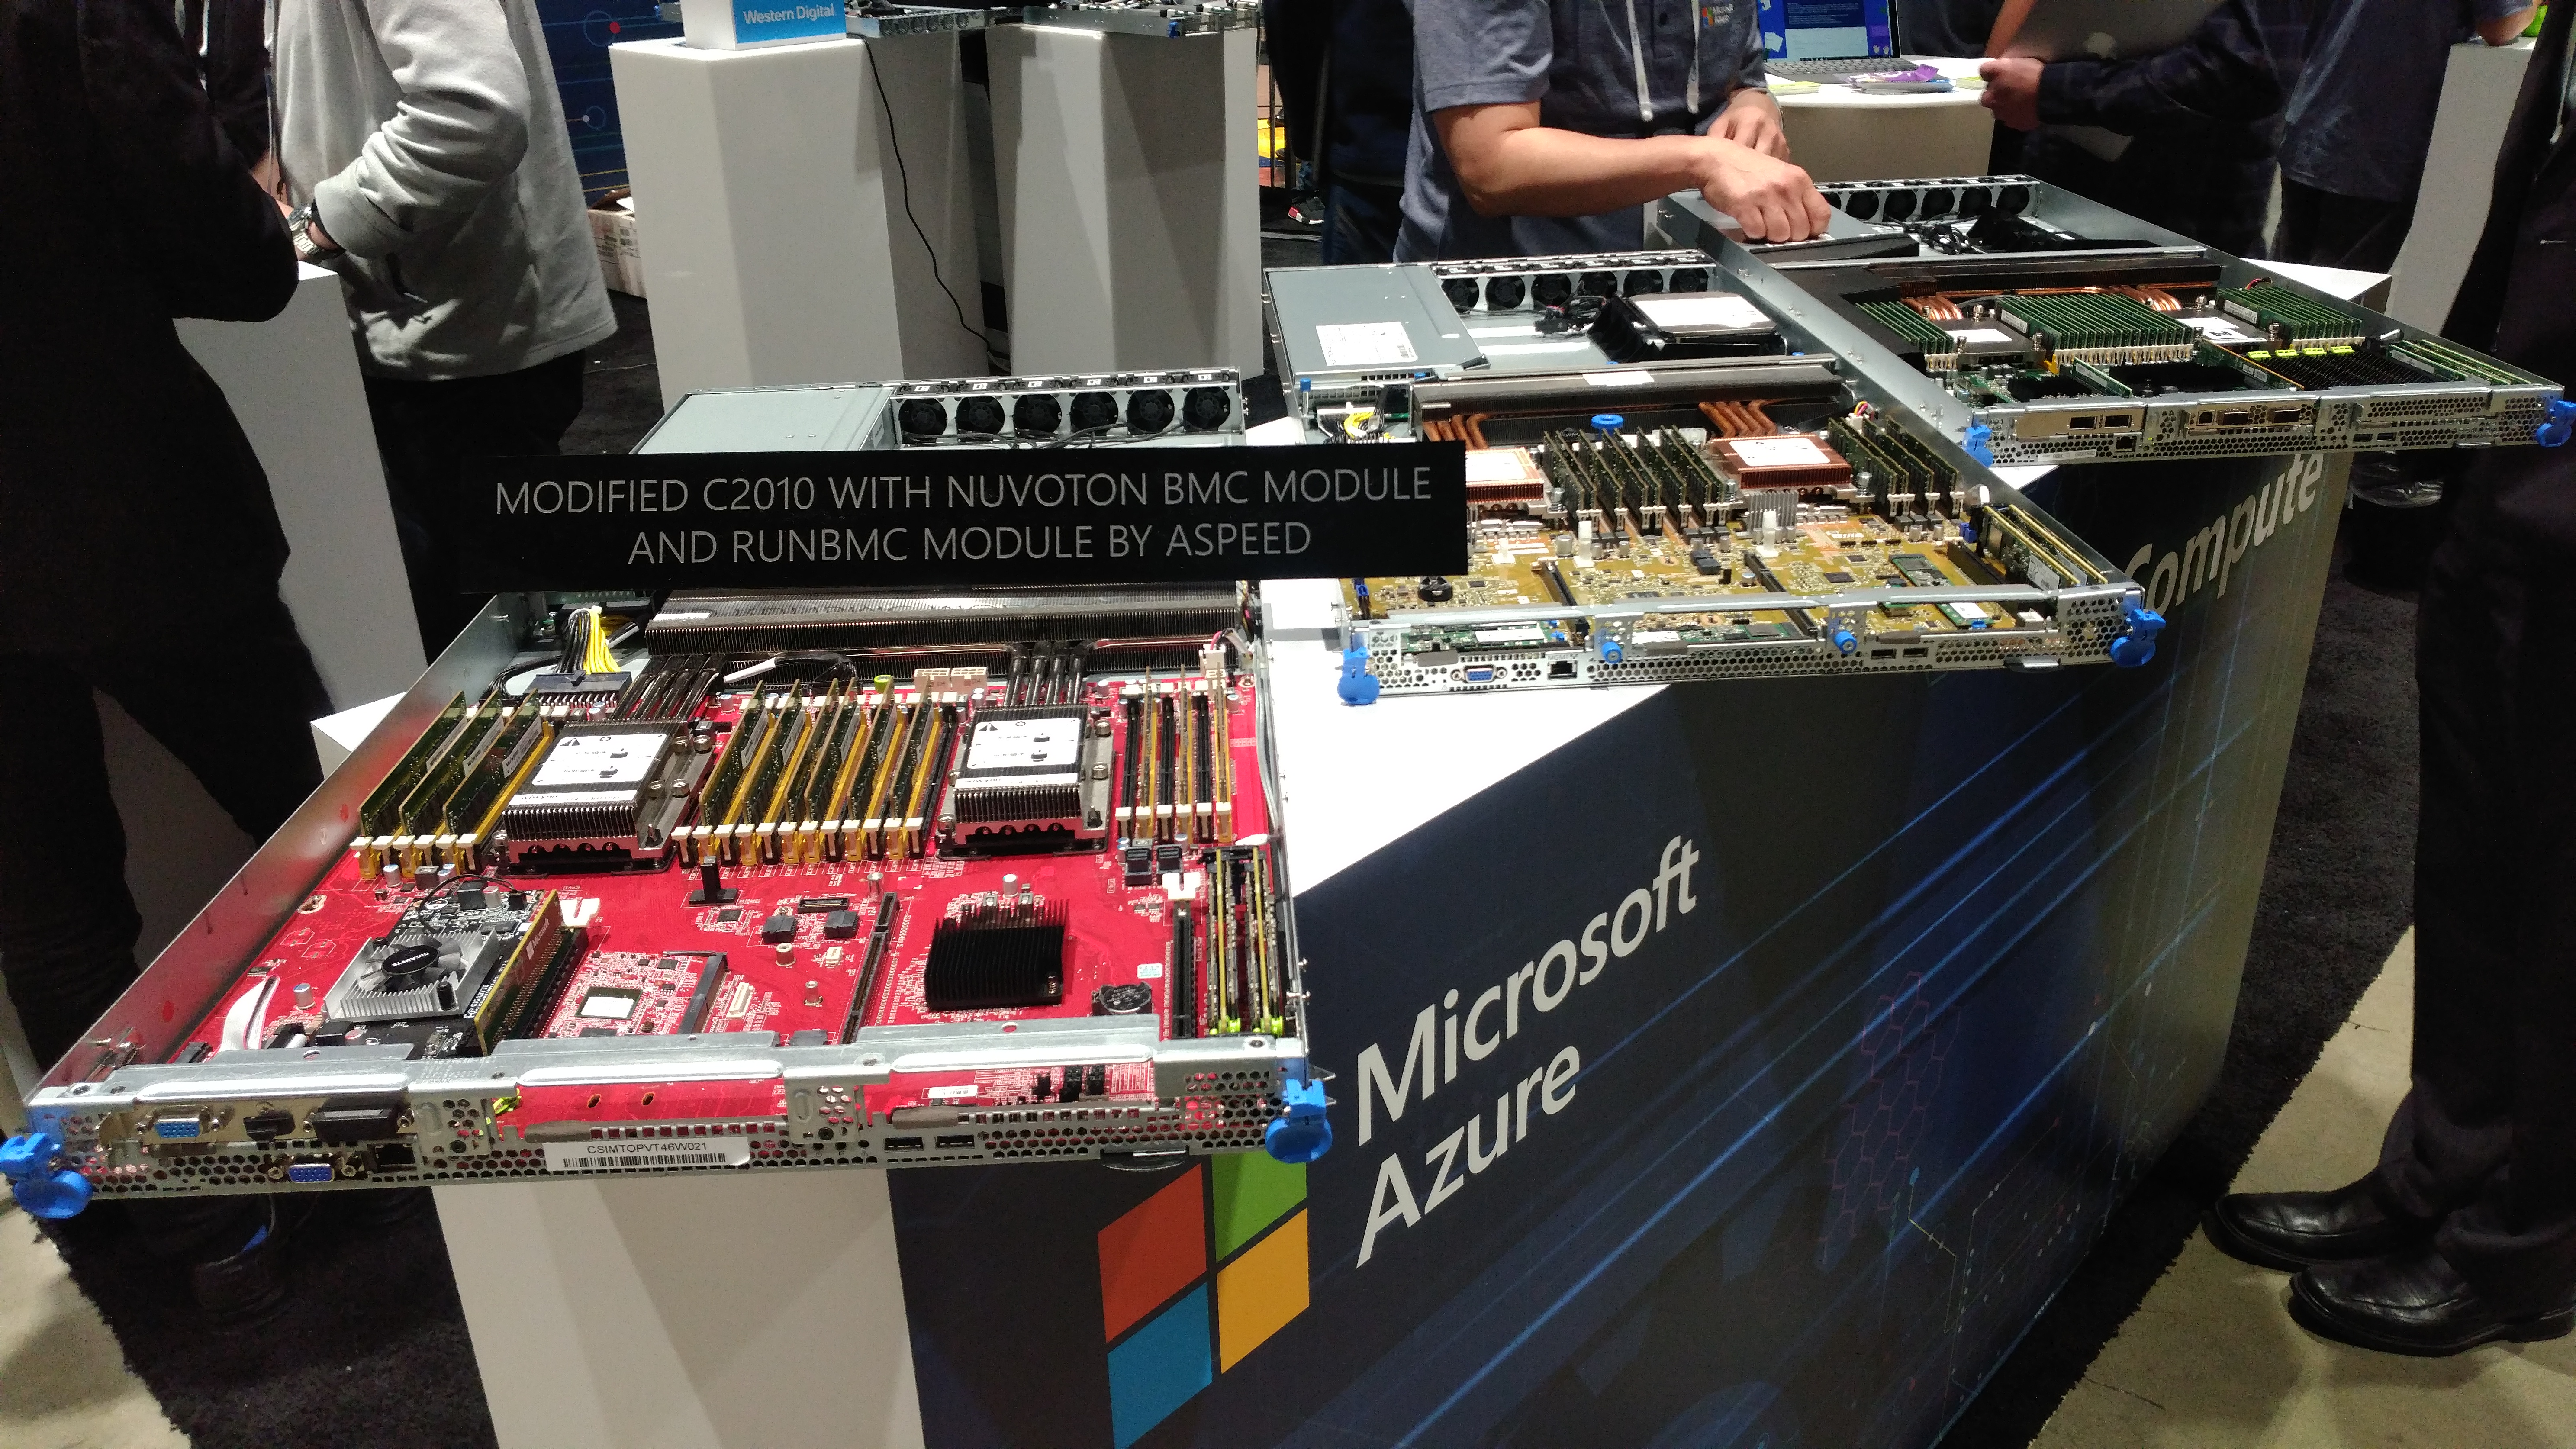 Microsoft Azure hardware on display at the OCP Summit 2019